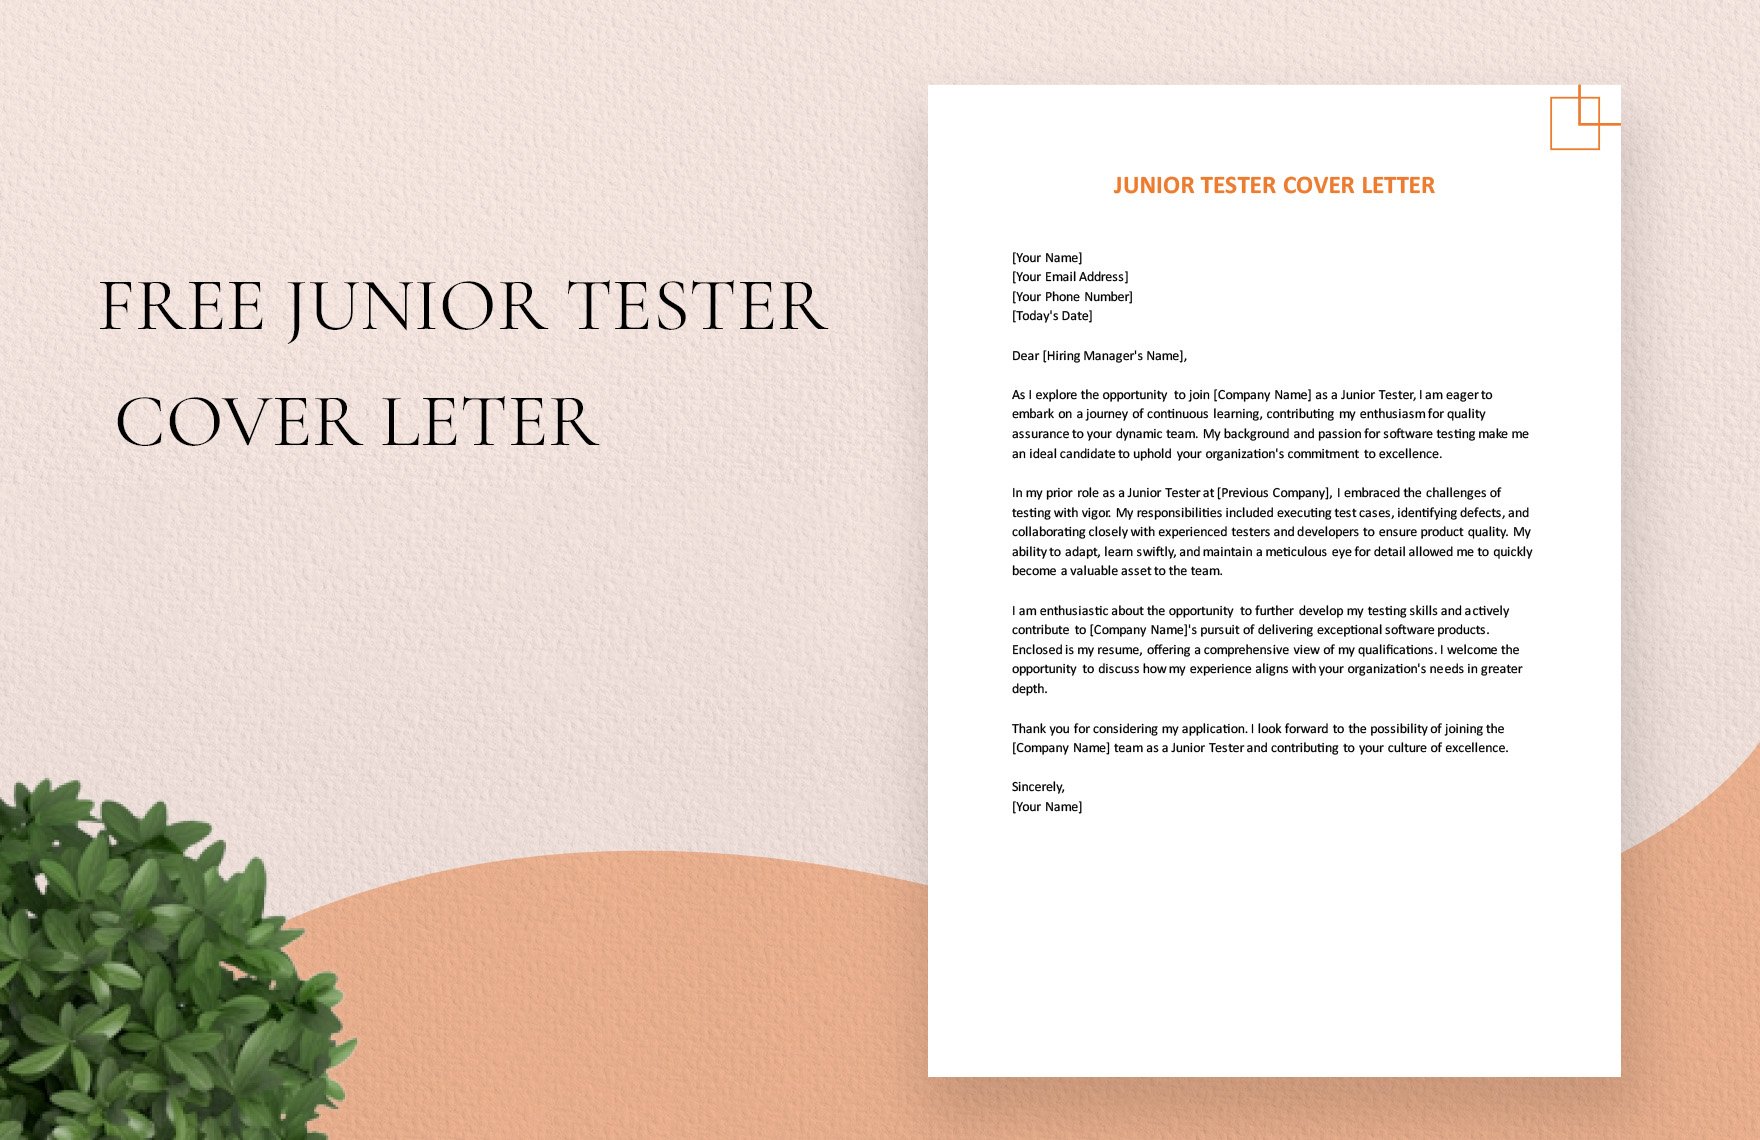 Junior Tester Cover Letter in Word, Google Docs, PDF